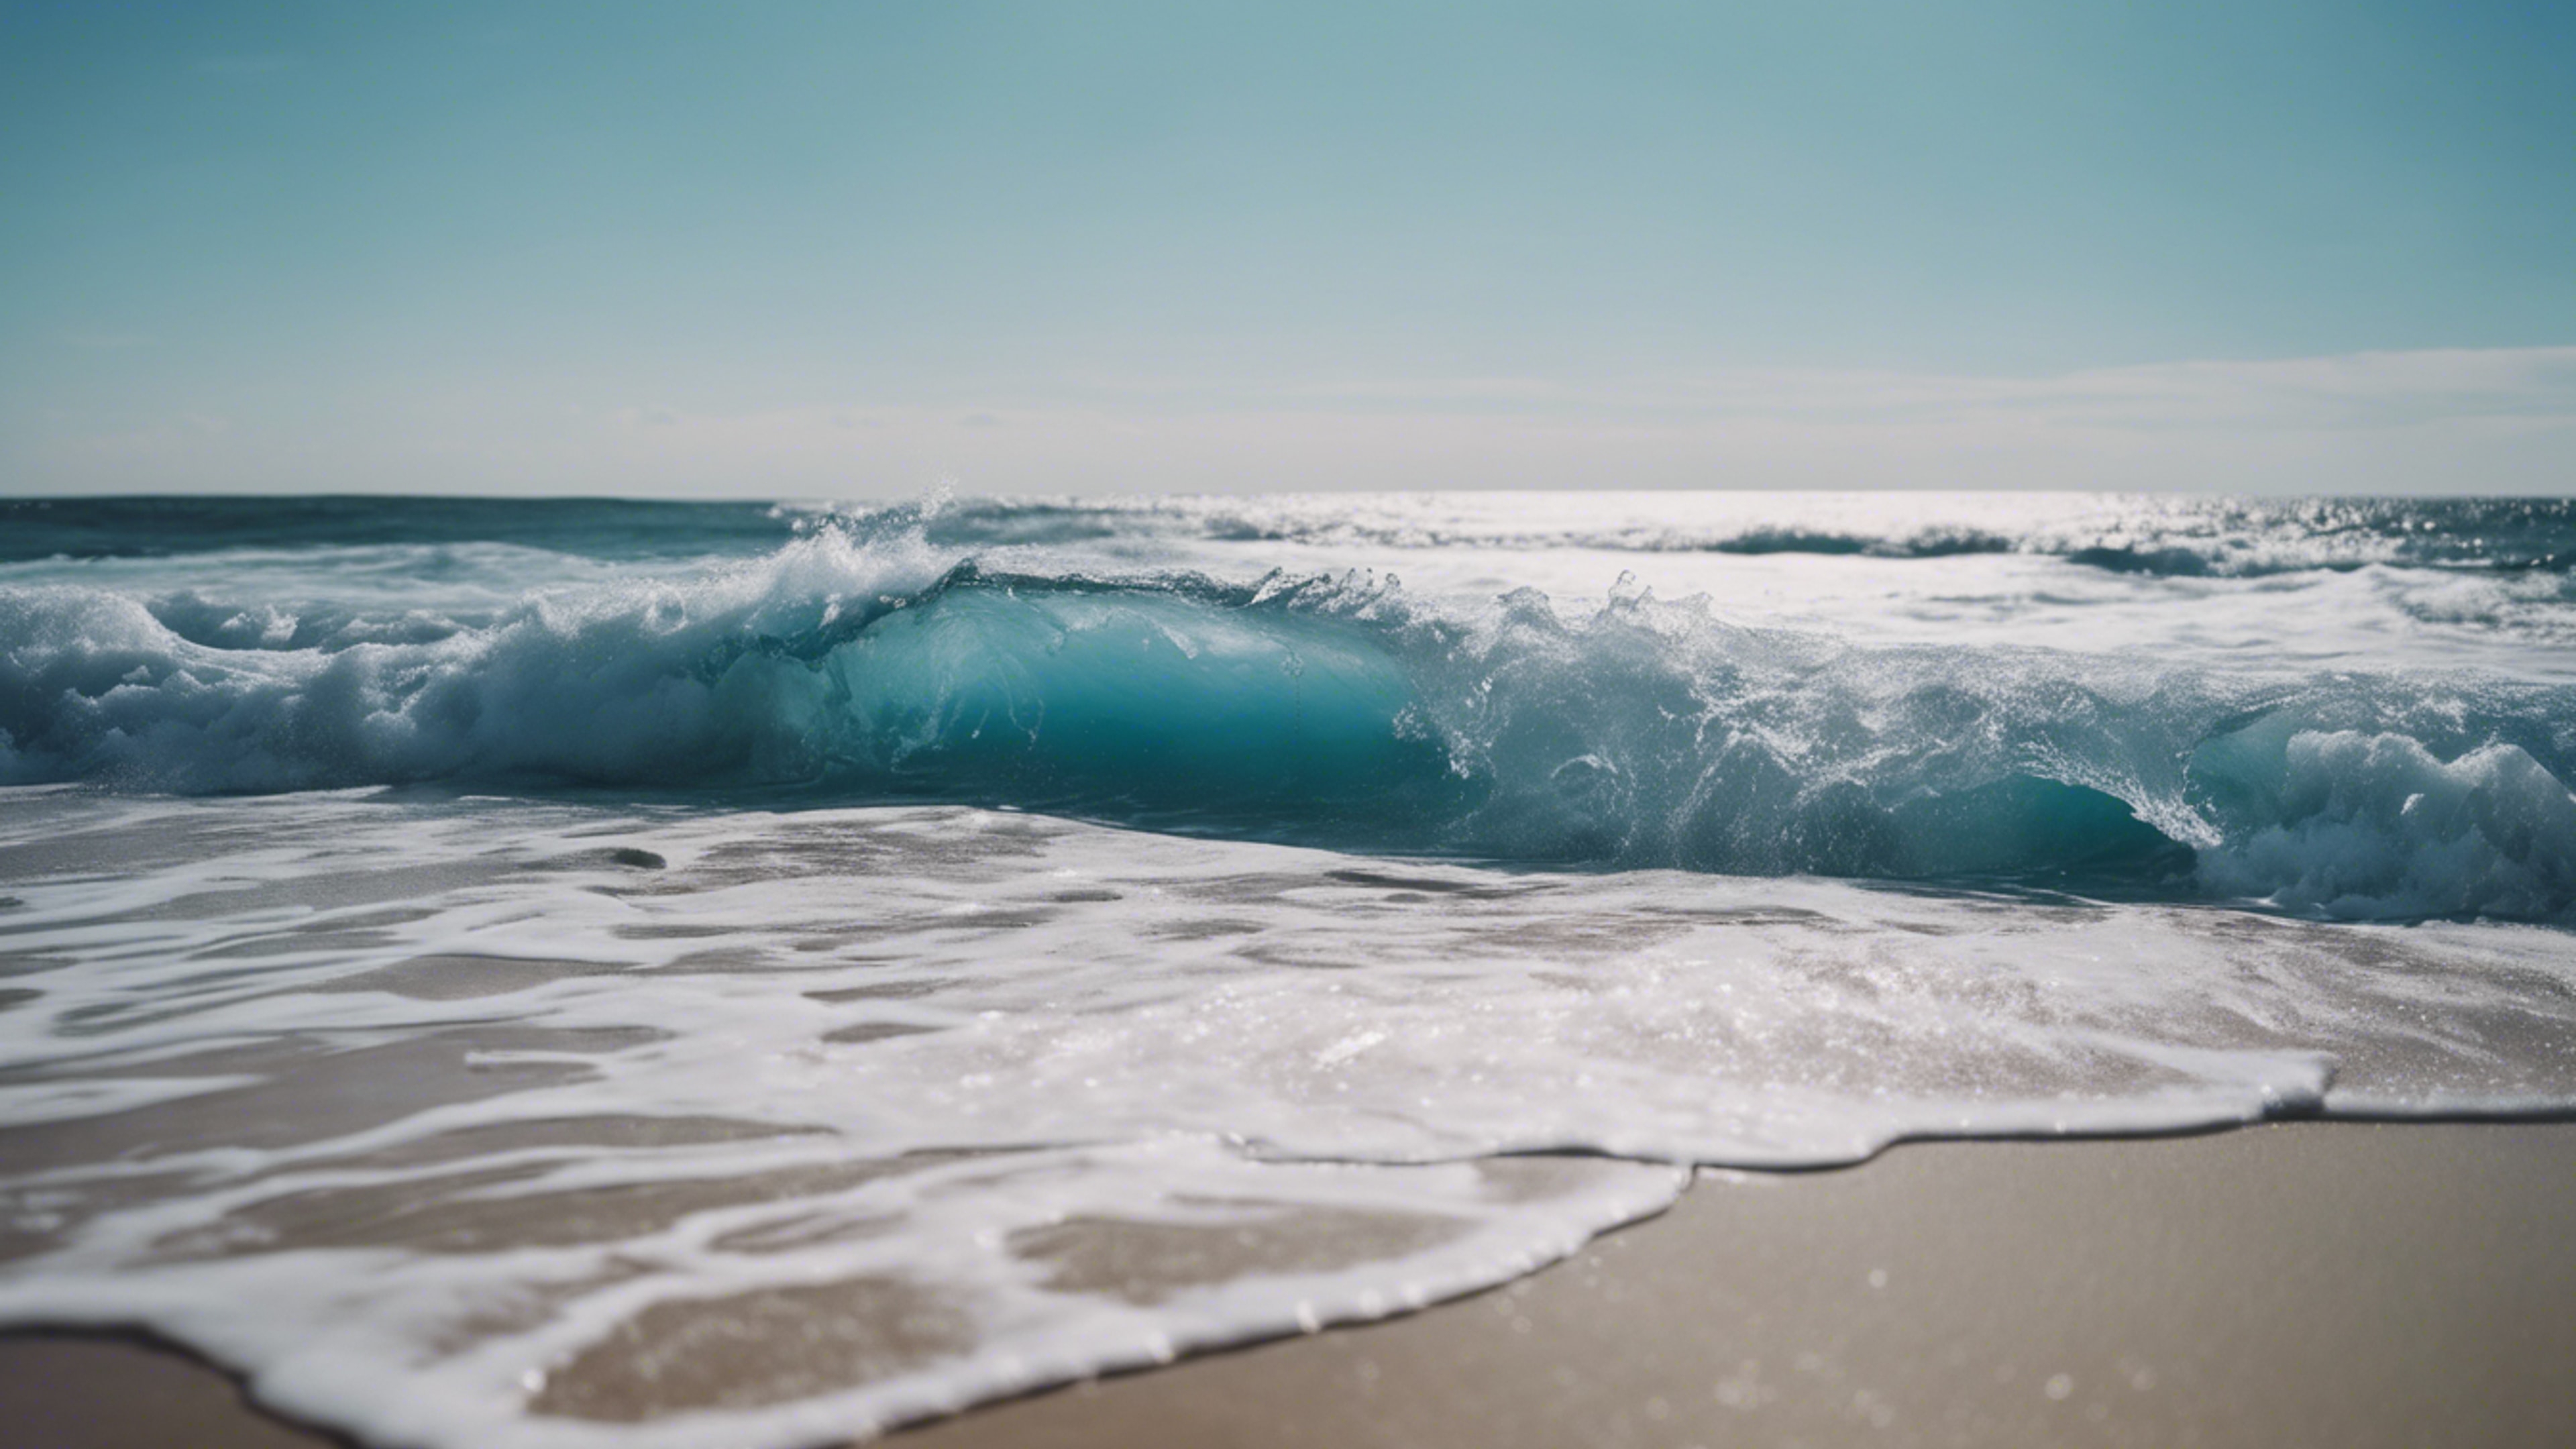 Bright yet pastel blue ocean waves calmly lapping against a deserted beach. Tapeta[1ebcfb30d8d842e89fbb]